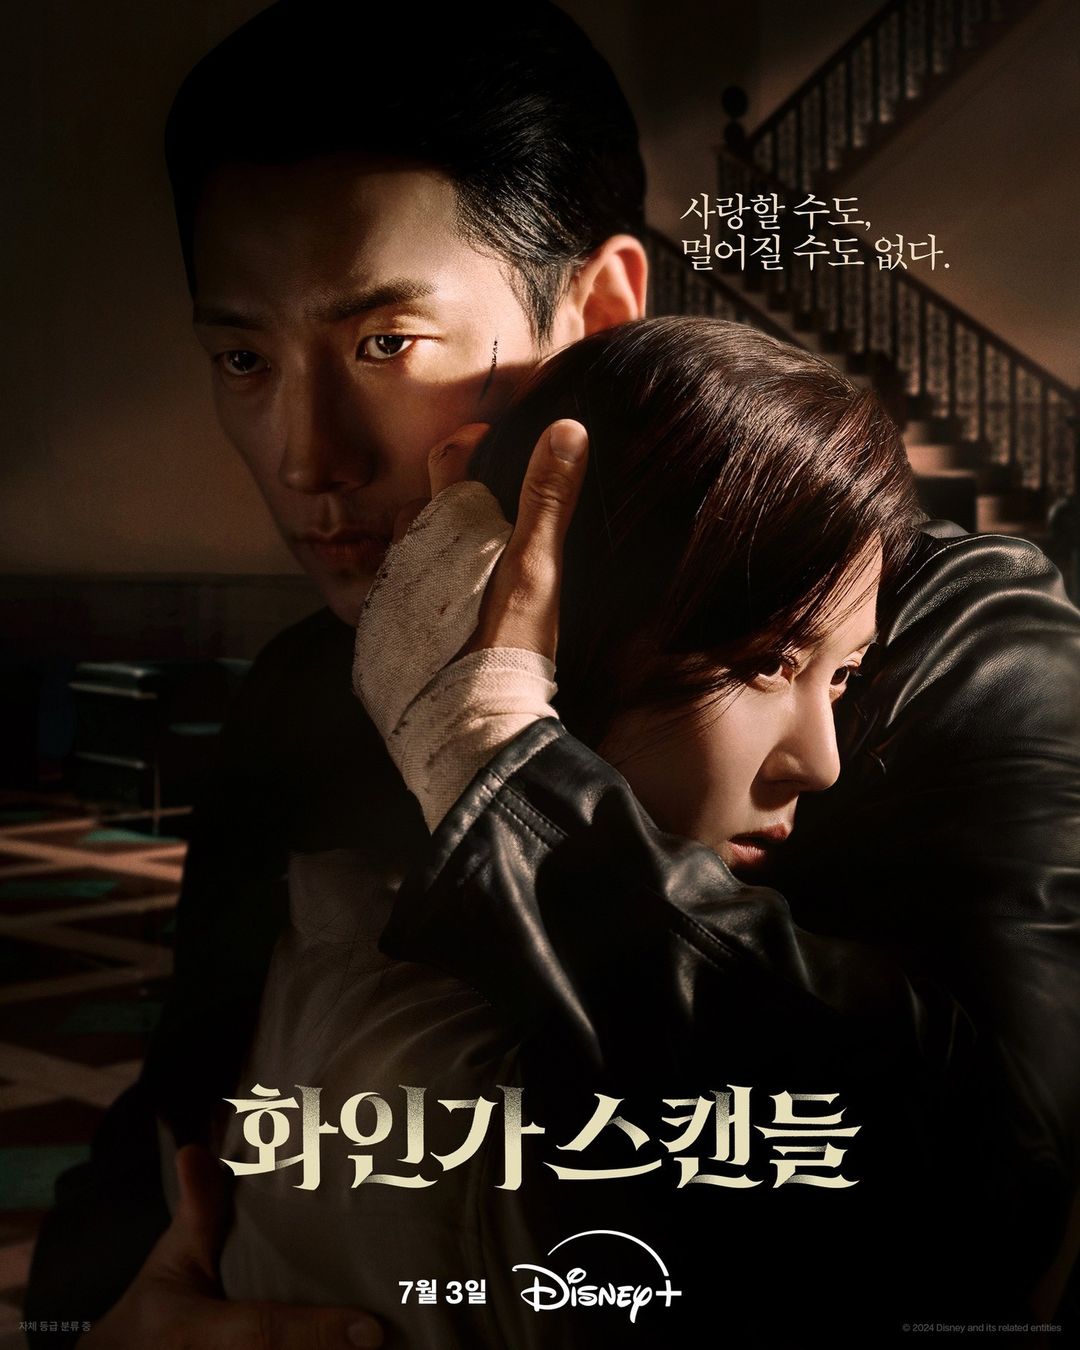 Rain And Kim Ha Neul's Love Is Forbidden In Upcoming Drama 